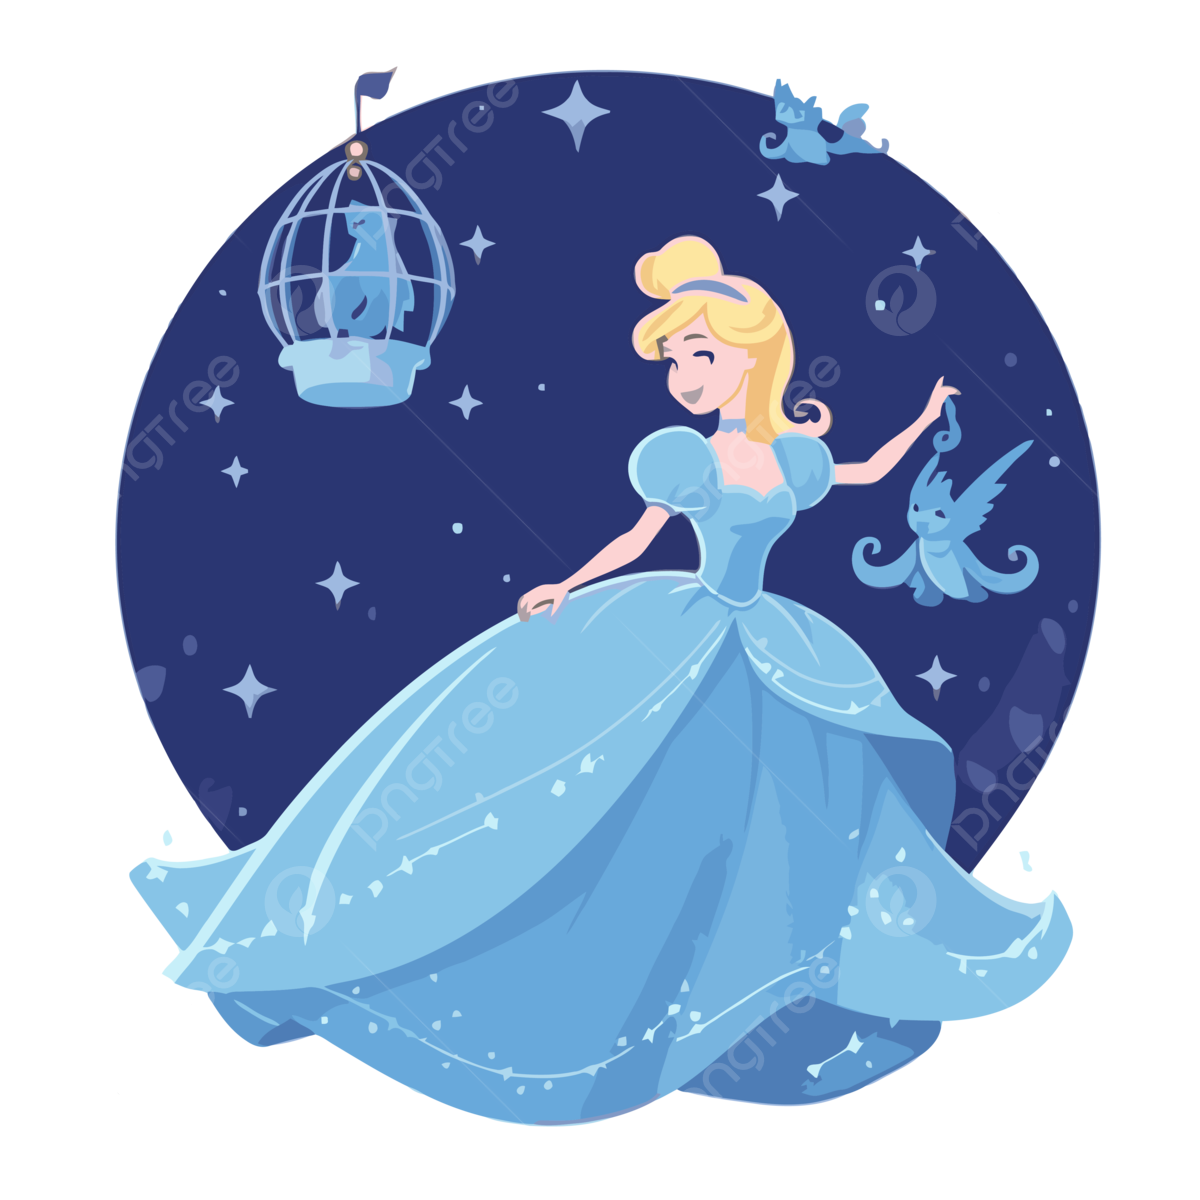 Cinderella clipart disney princess cinderella in blue dress with bird cage cartoon vector cinderella clipart cartoon png and vector with transparent background for free download